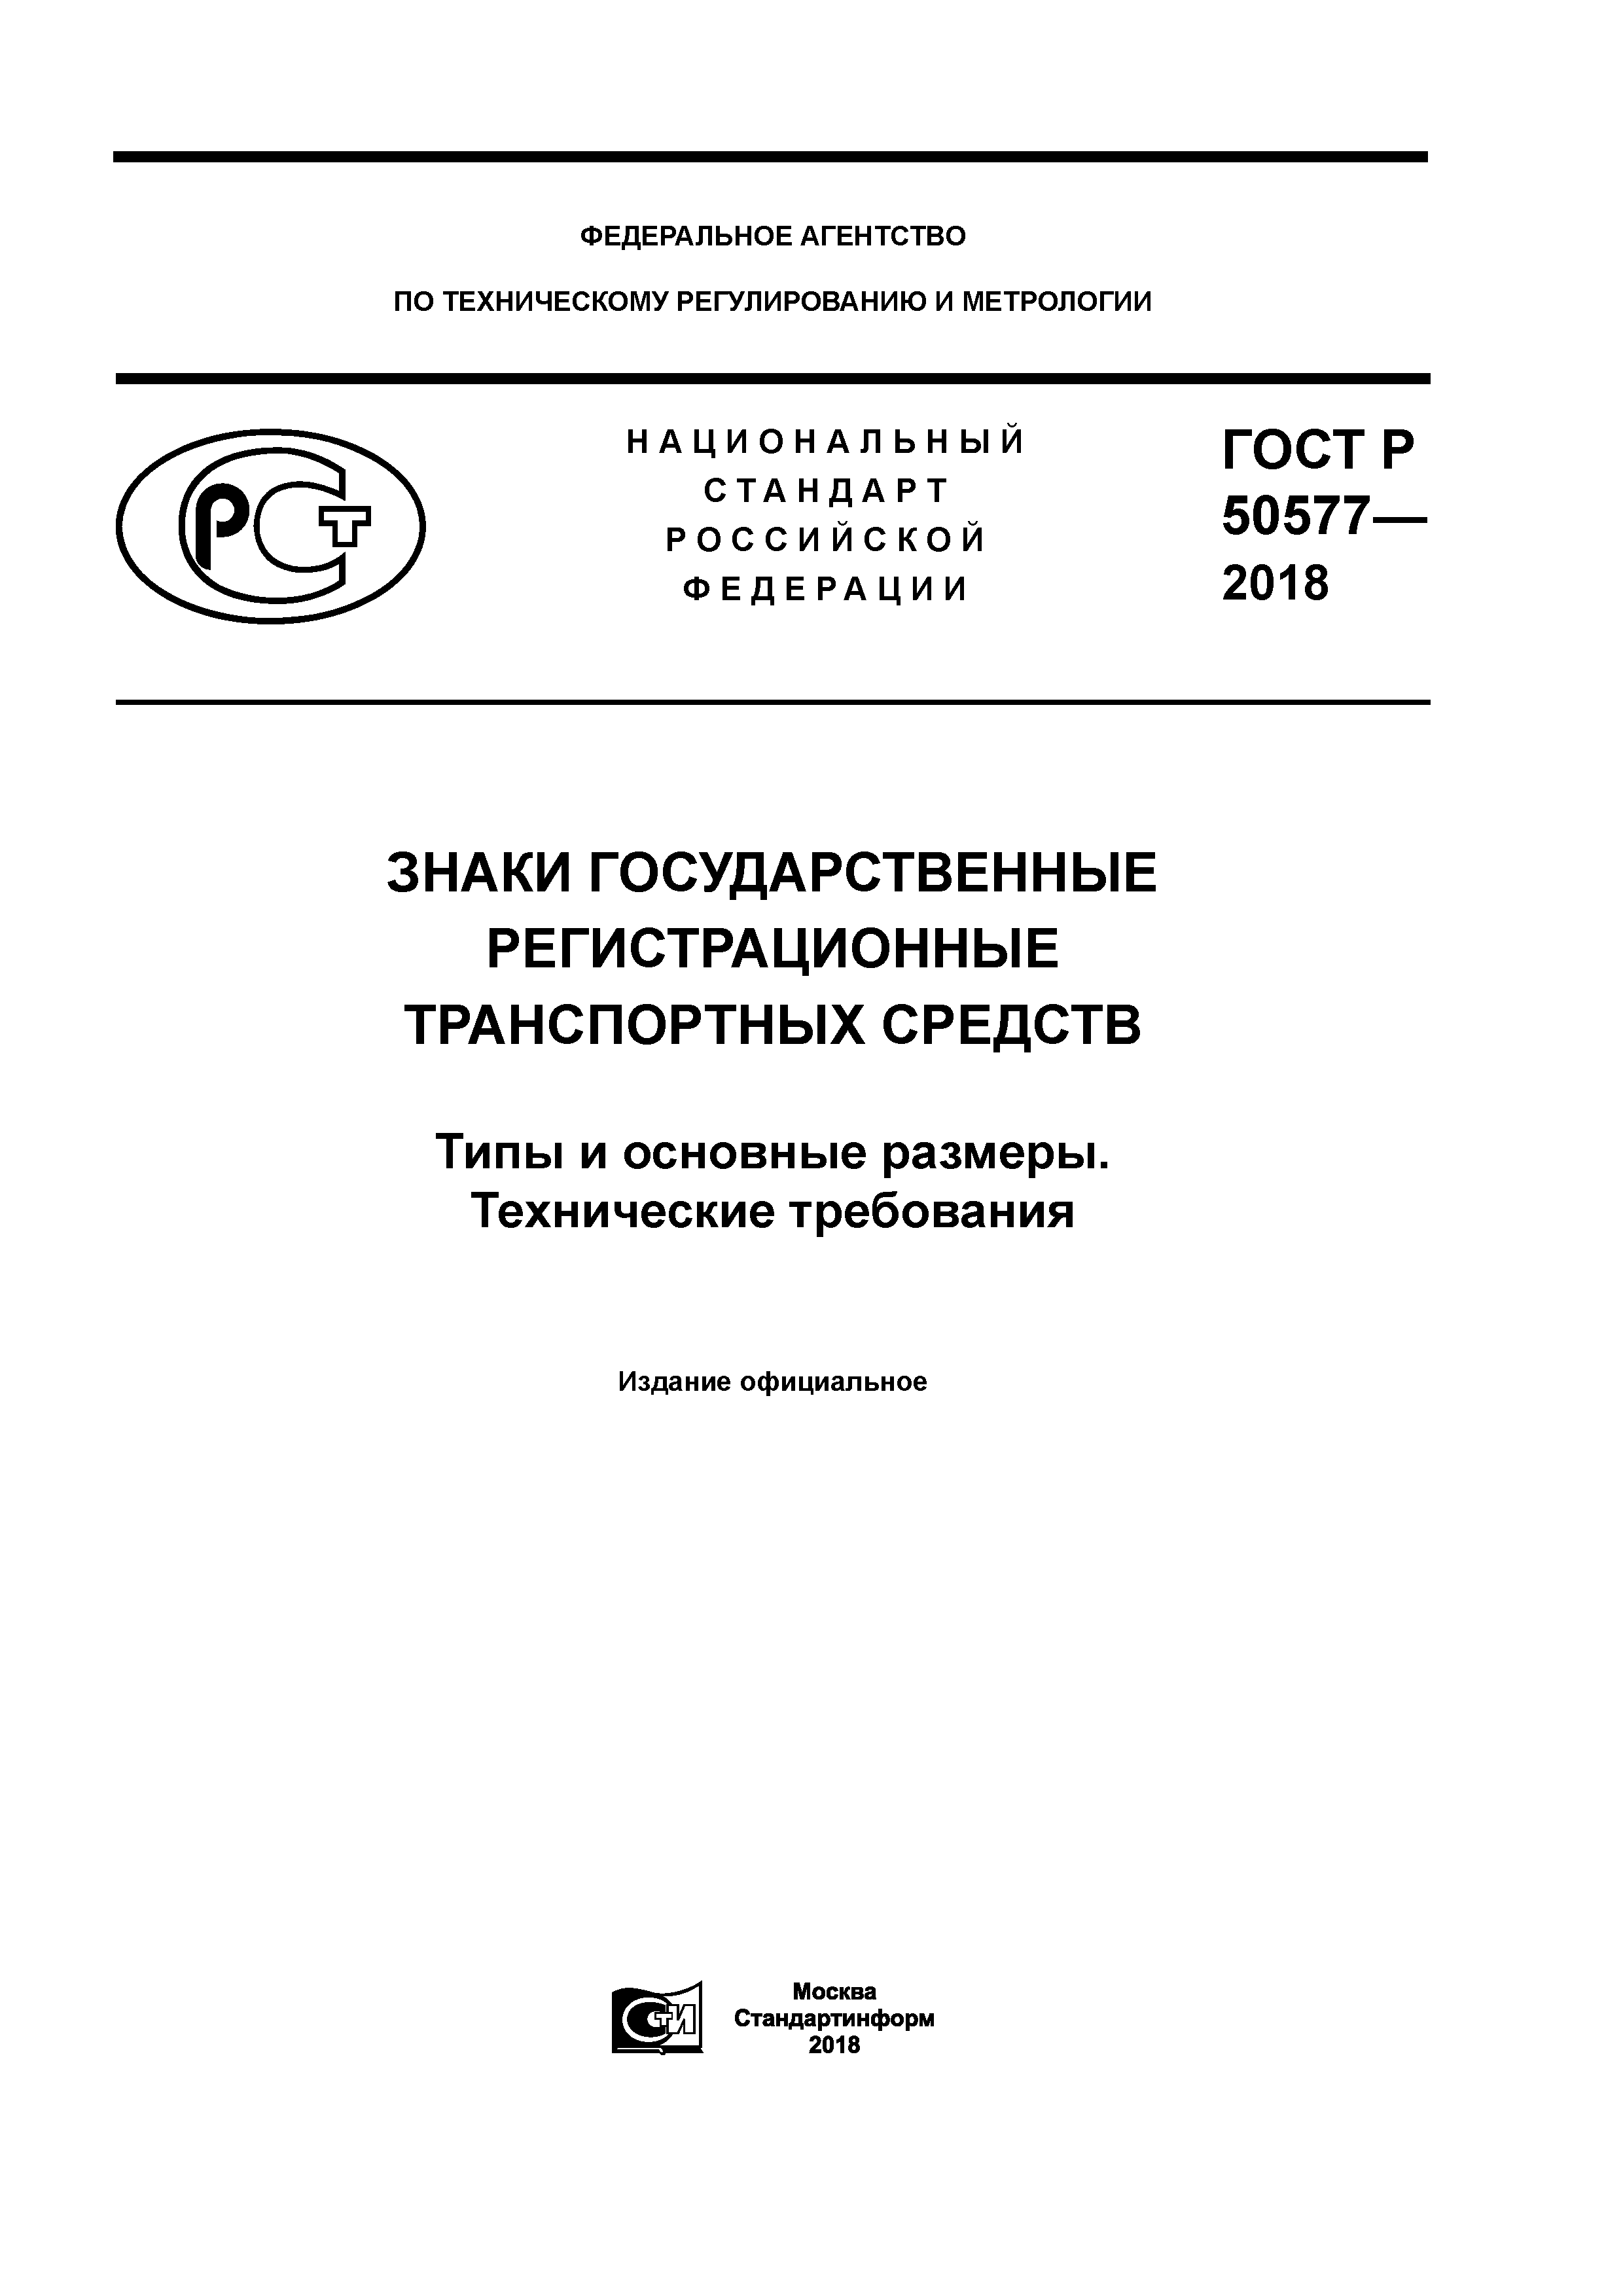 ГОСТ Р 50577-2018